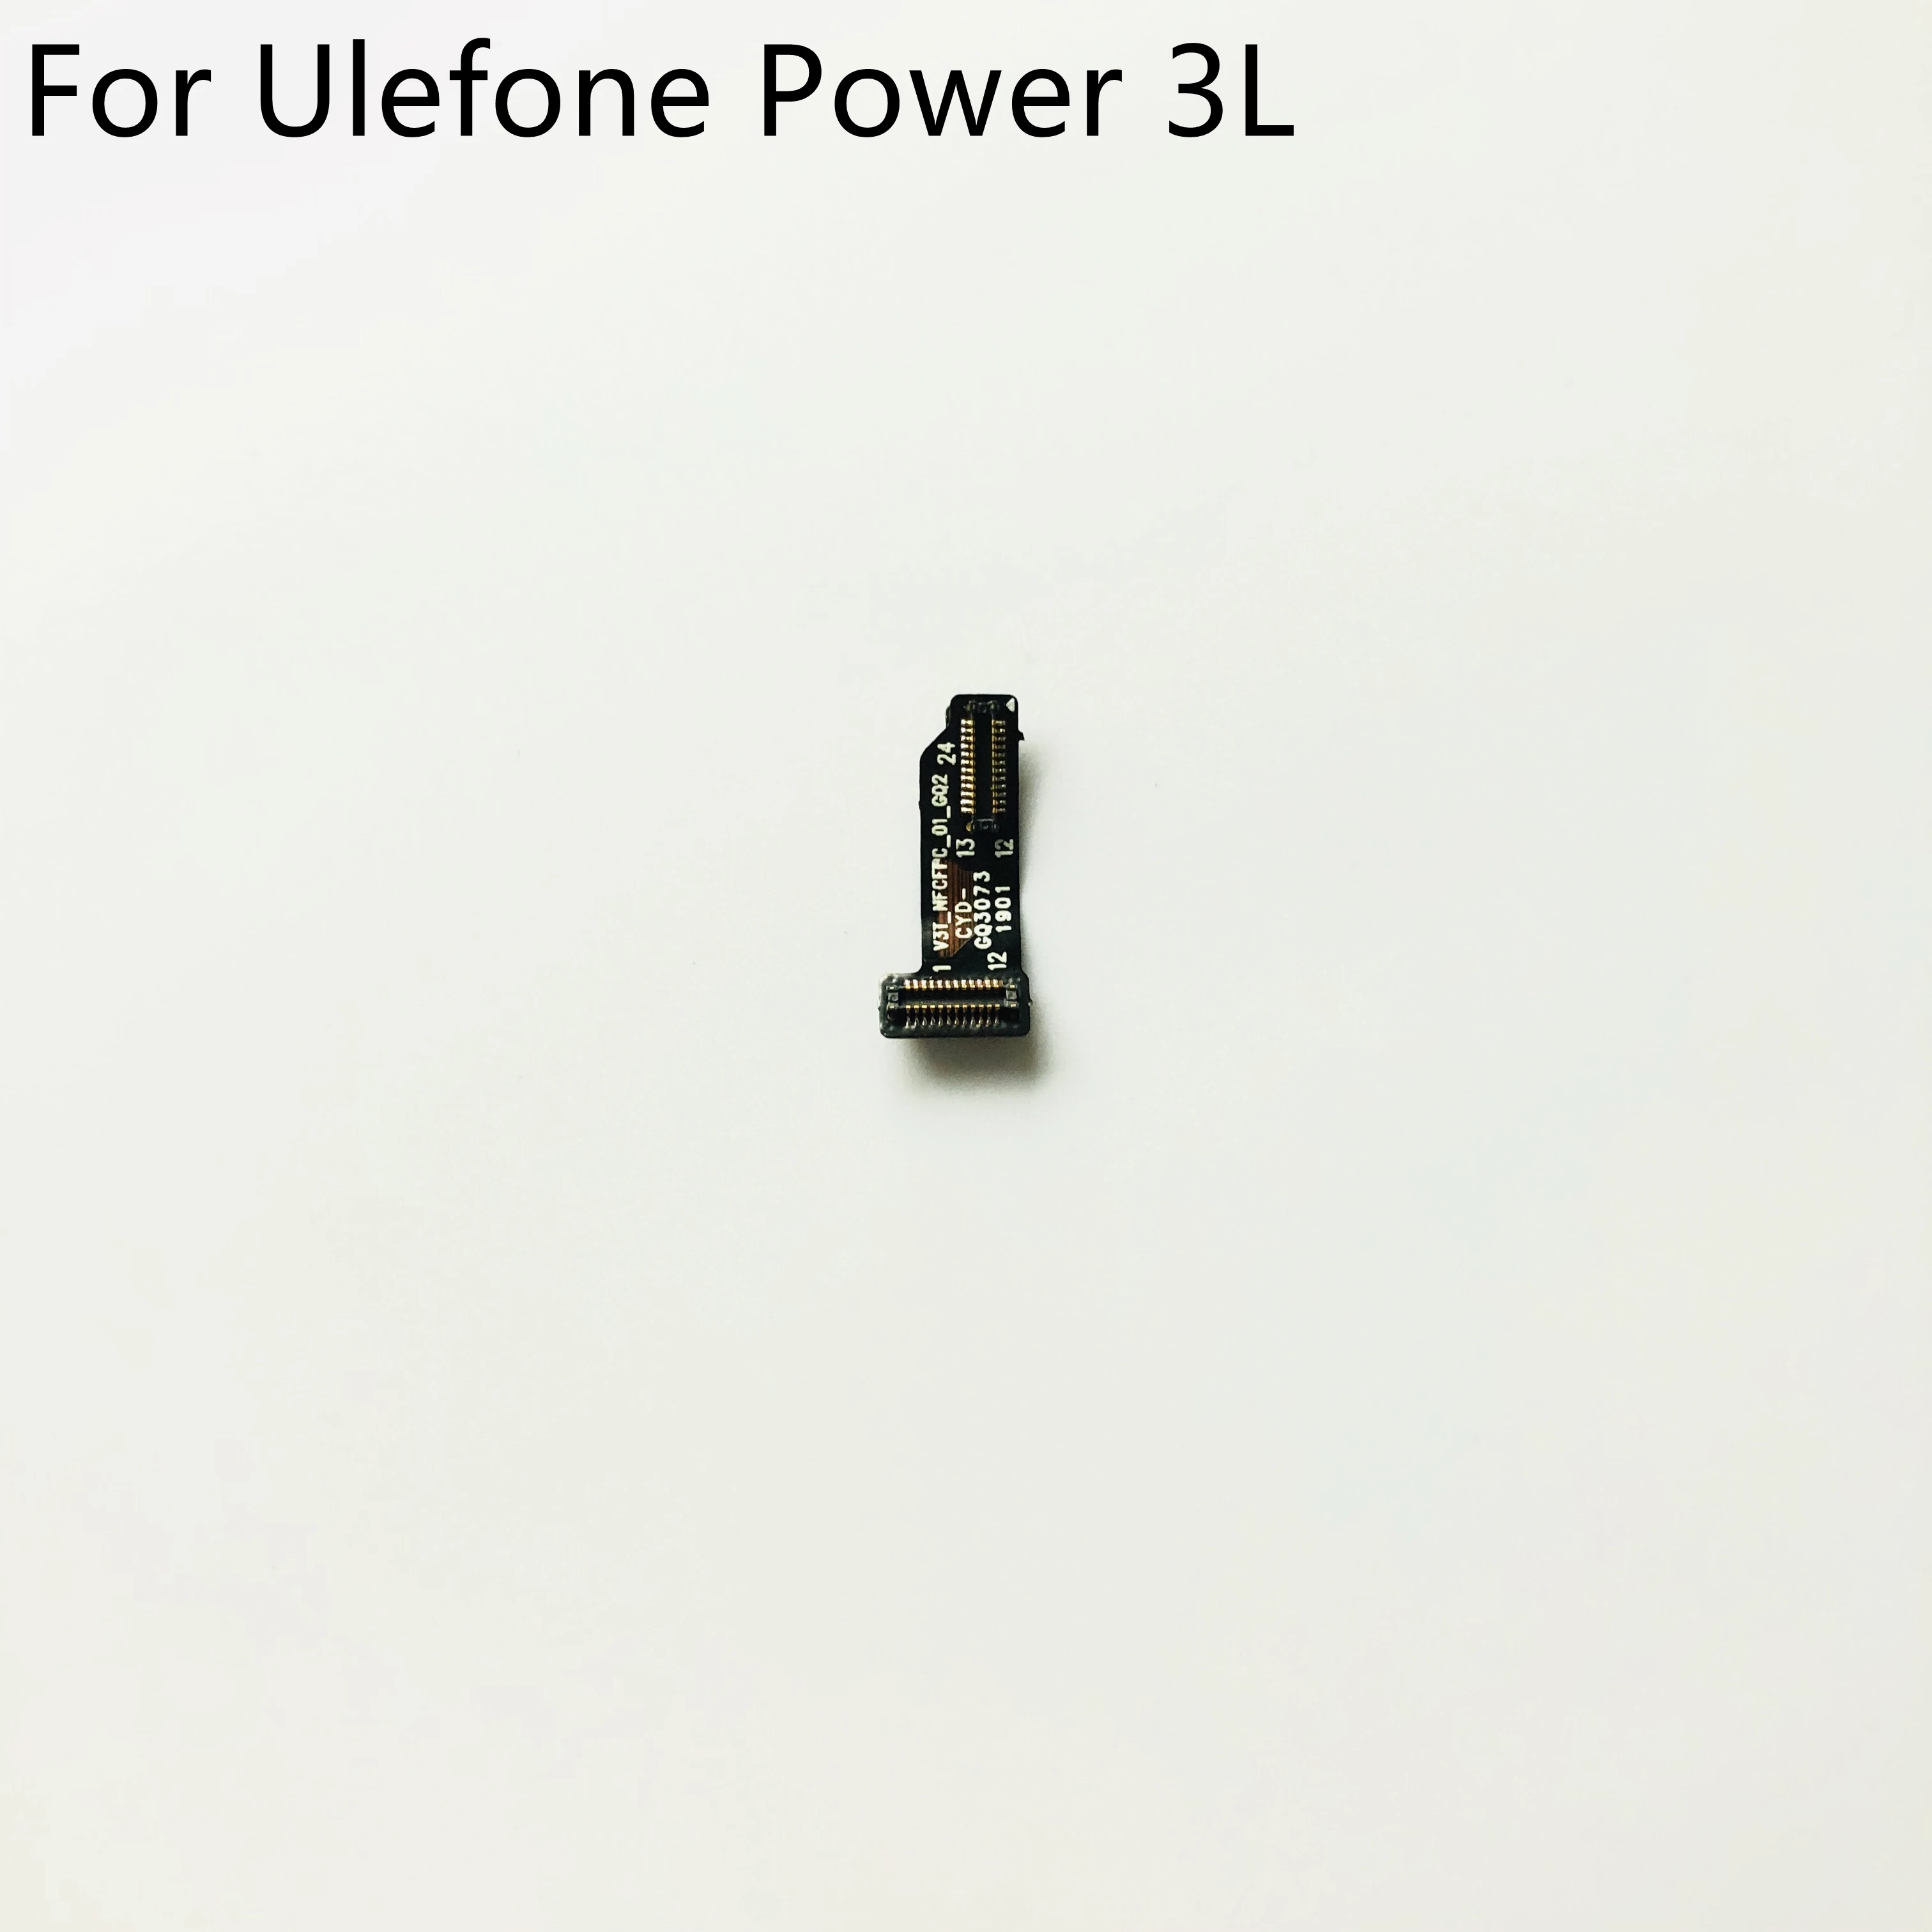 

Ulefone Power 3L FPC For Ulefone Power 3L MTK6739 Quad Core 6.0" 1440x720 Smartphome